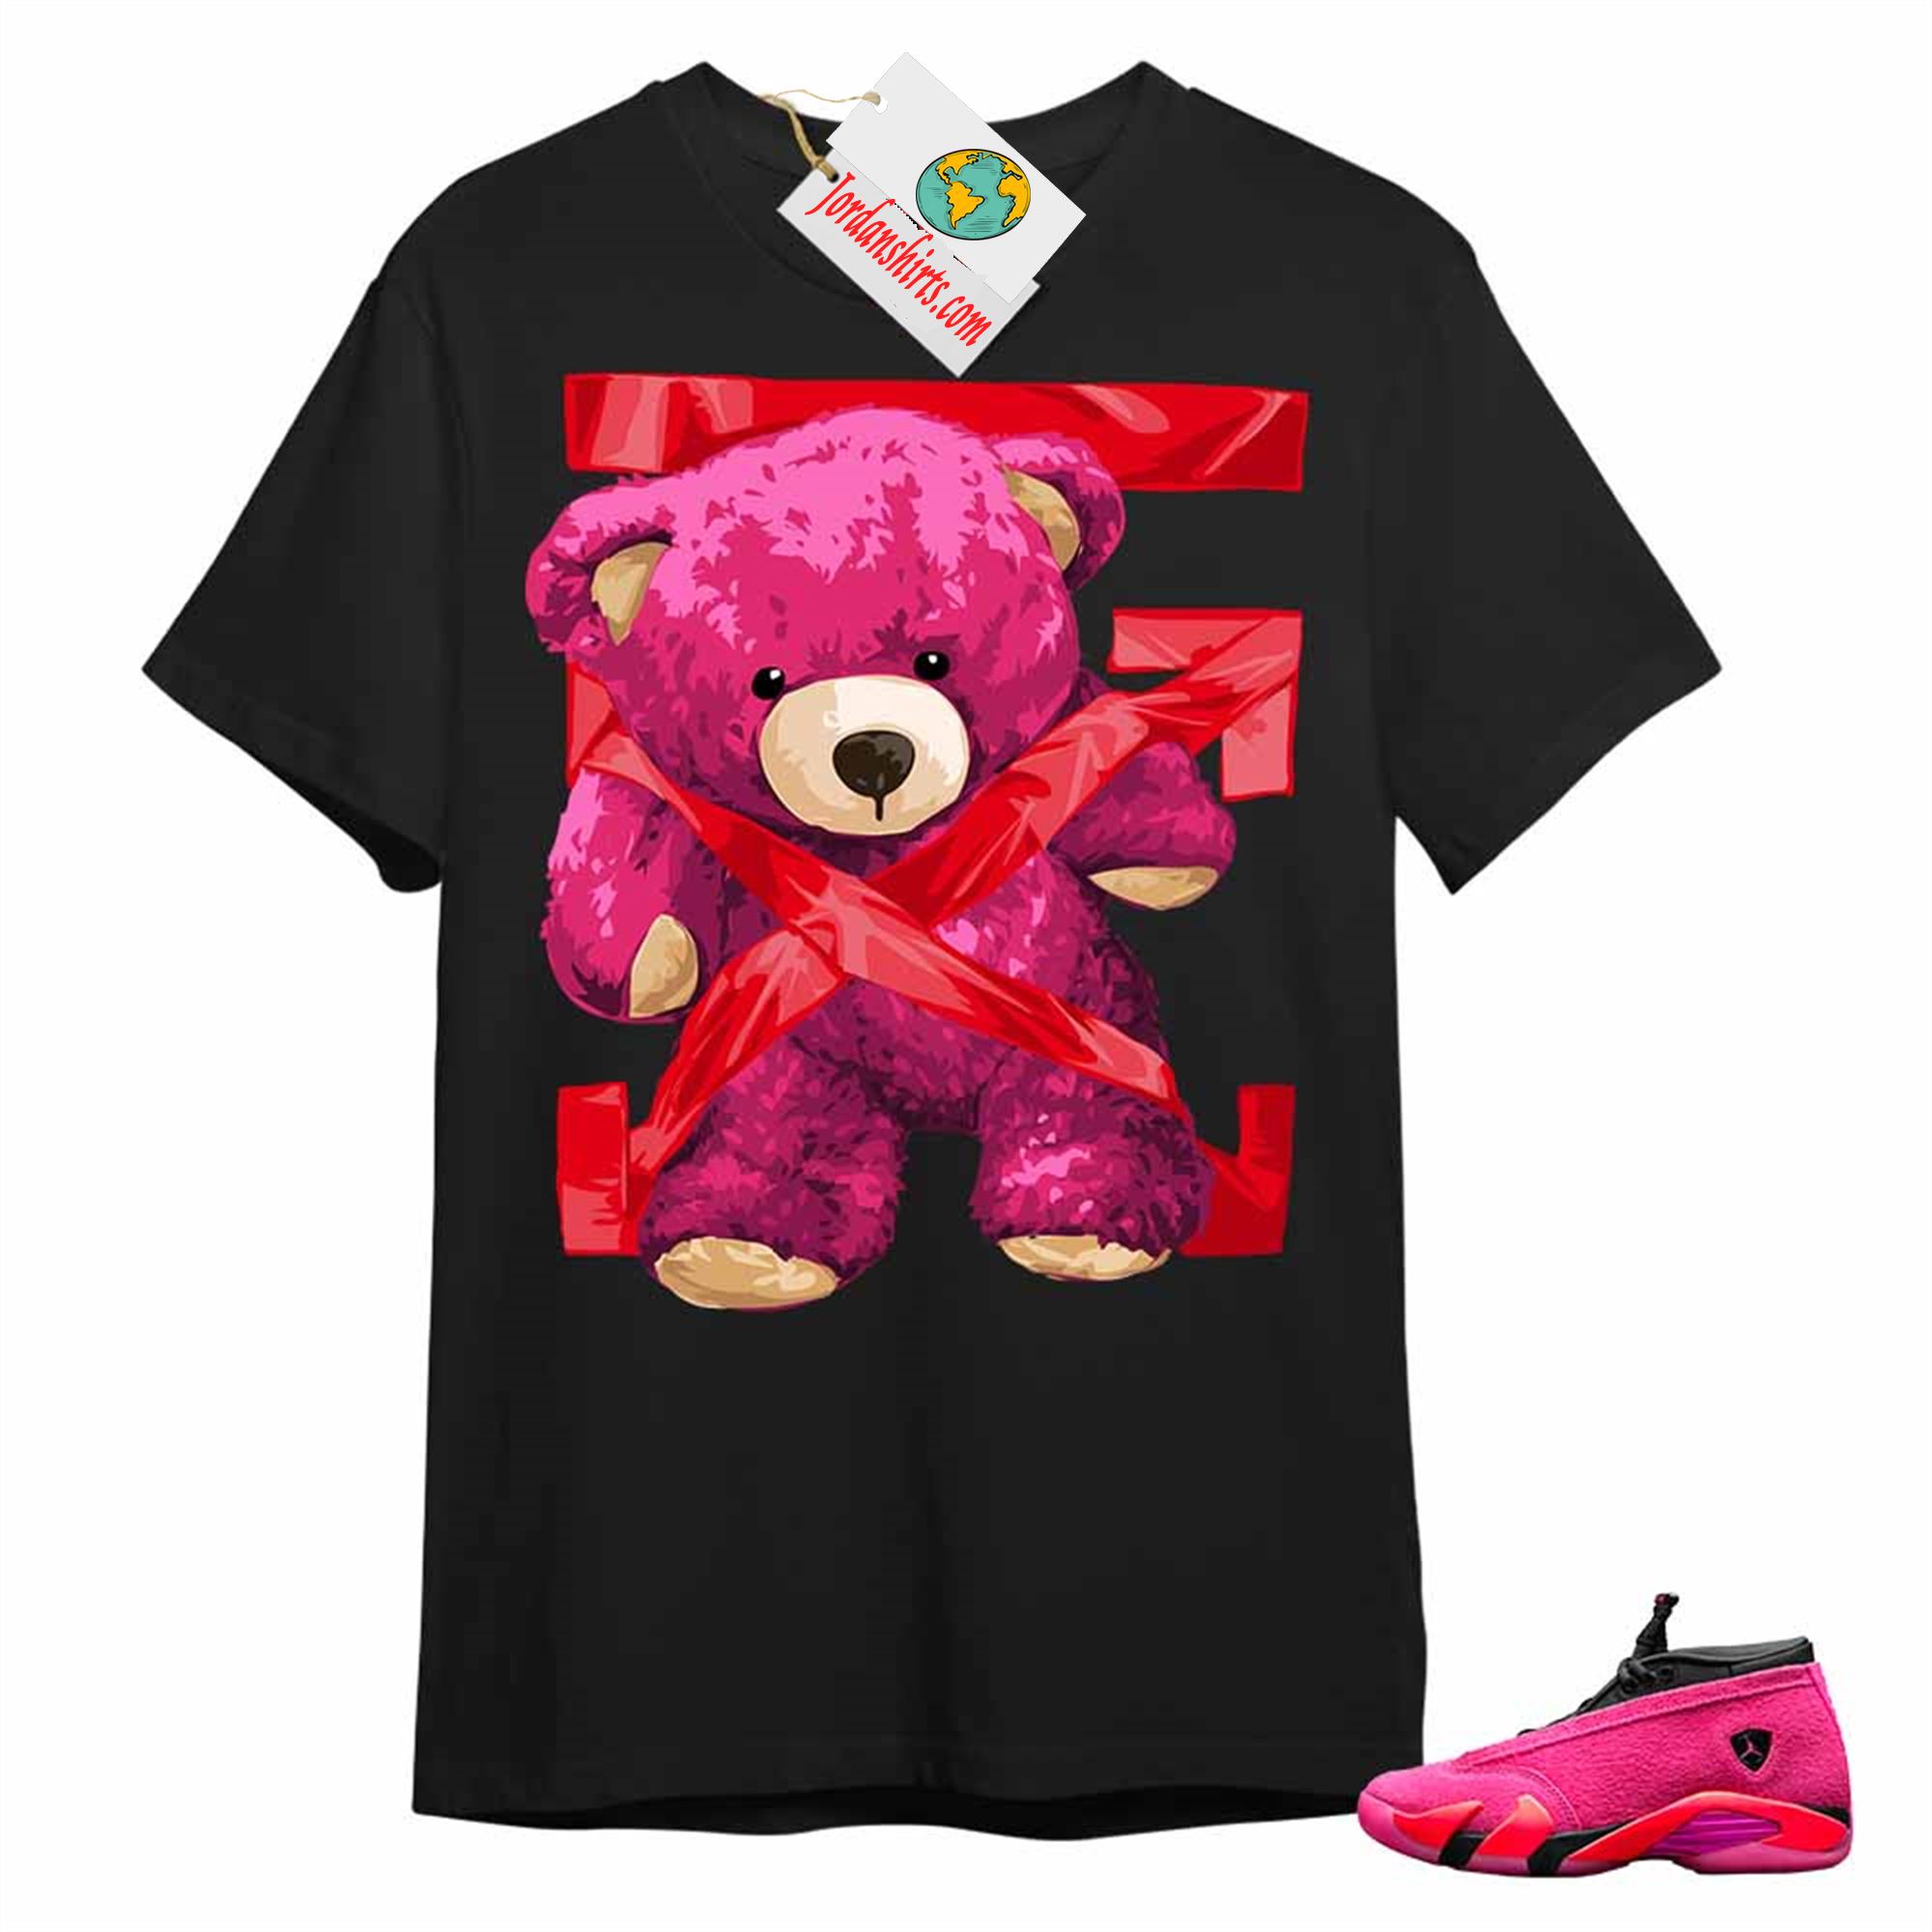 Jordan 14 Shirt, Teddy Bear Duck Tape Black T-shirt Air Jordan 14 Wmns Shocking Pink 14s Size Up To 5xl